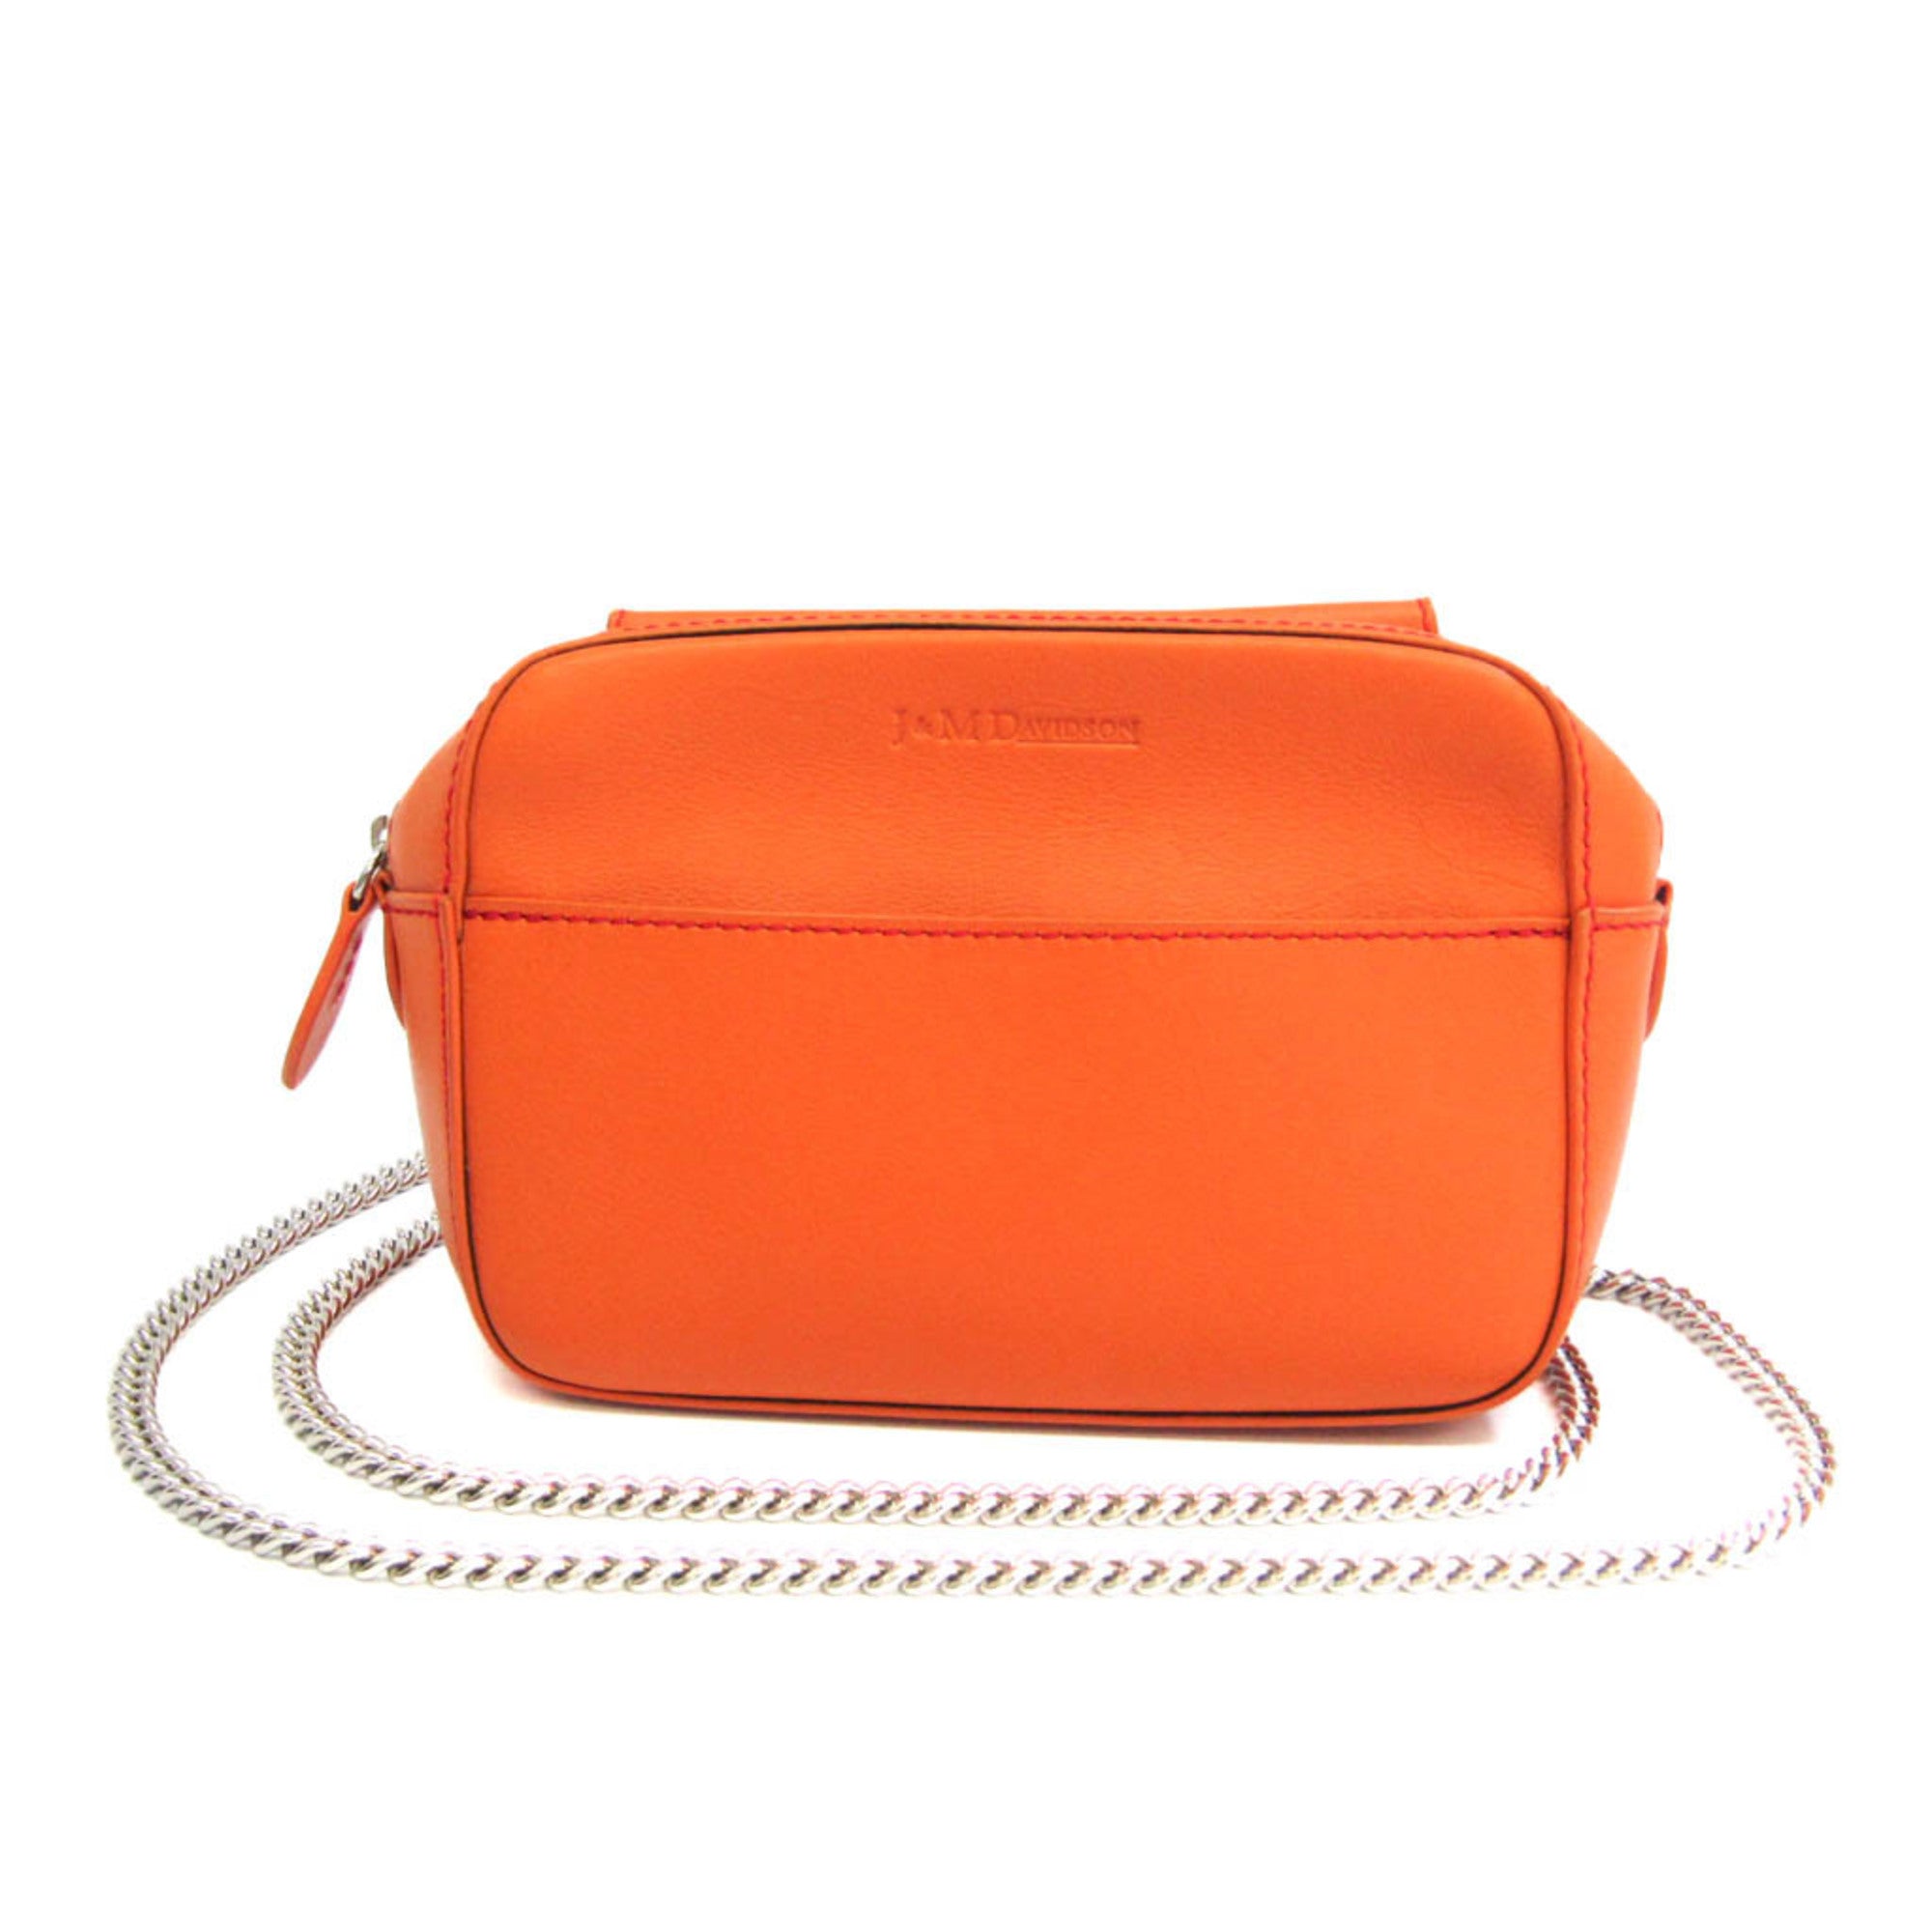 j&m davidson chain women's leather shoulder bag orange